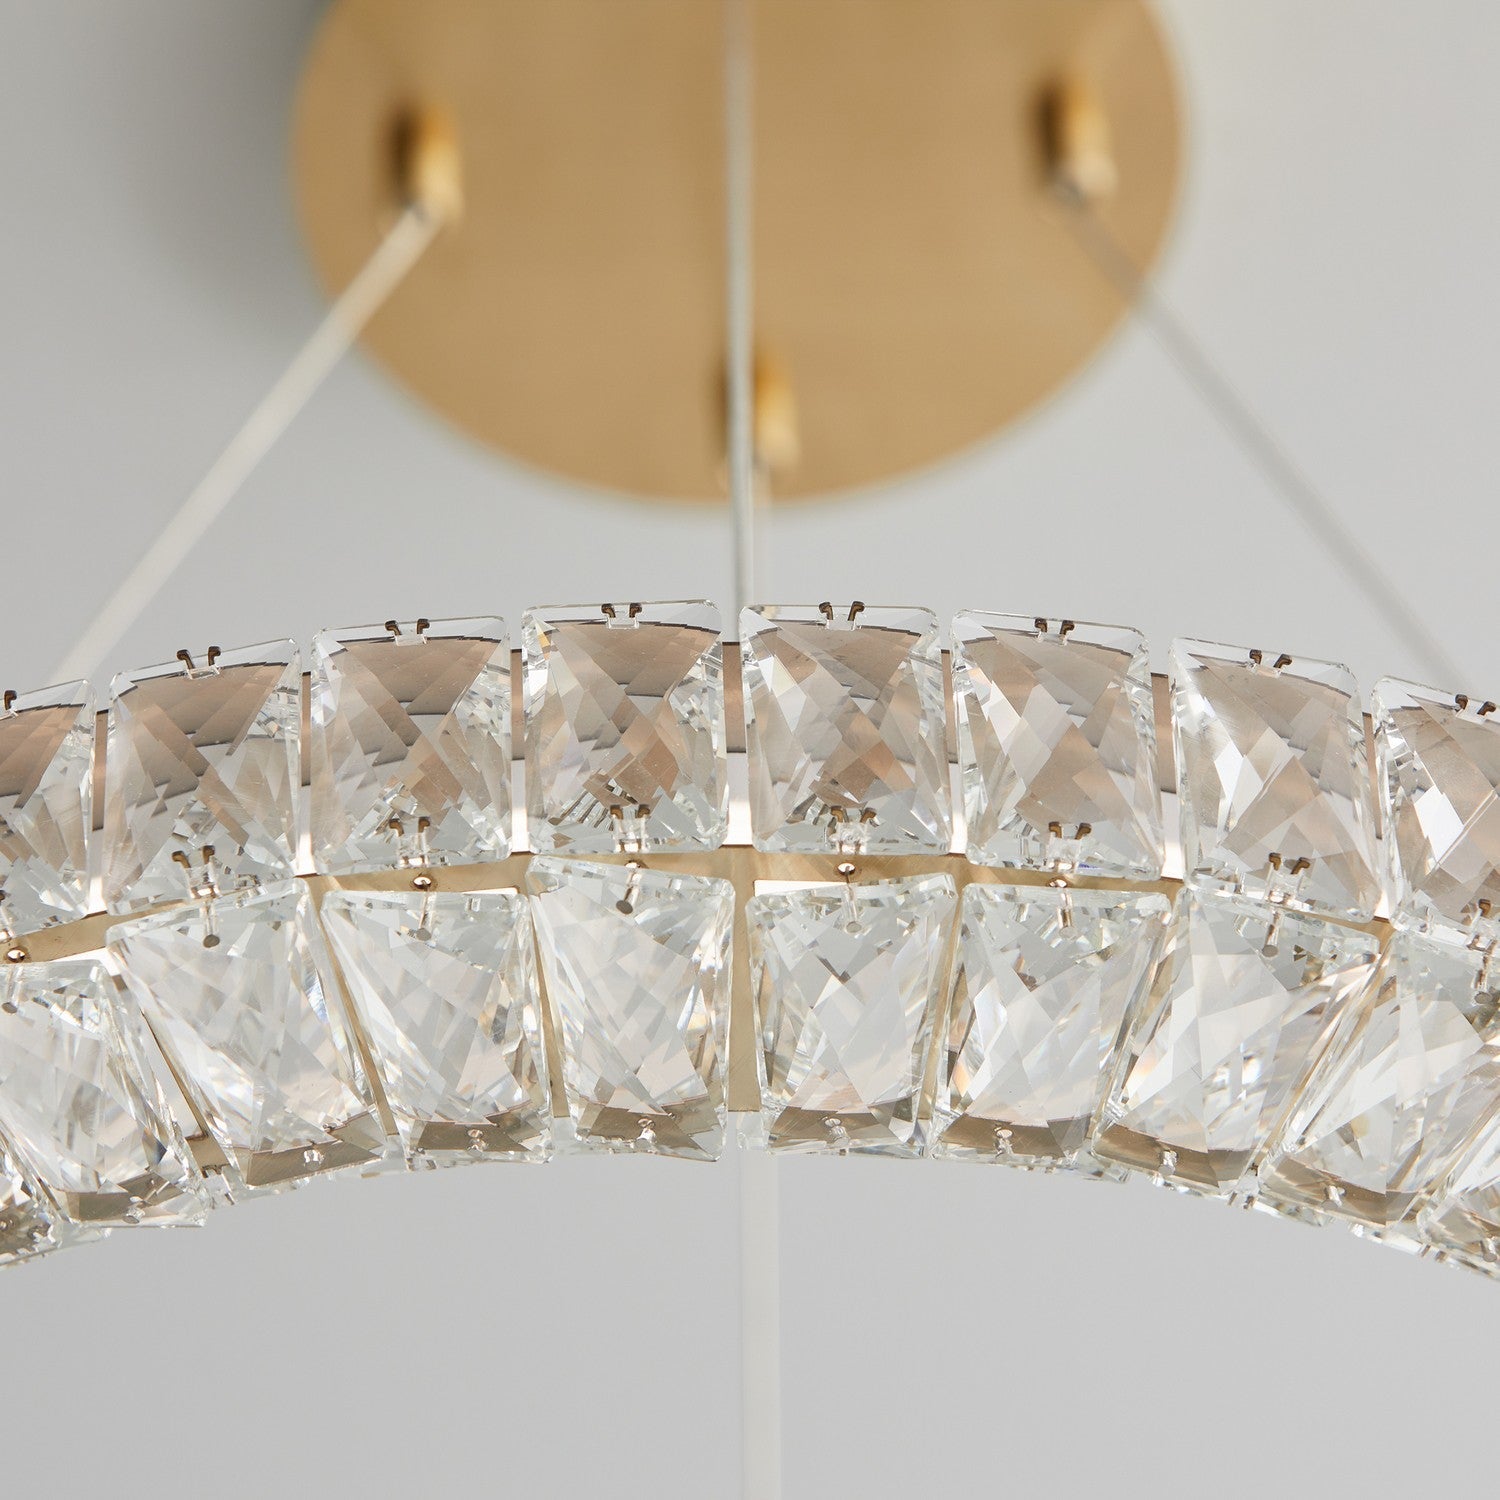 Oxygen Elan 3-874-40 Modern Ring LED Chandelier Light Fixture - Aged Brass, Crystal